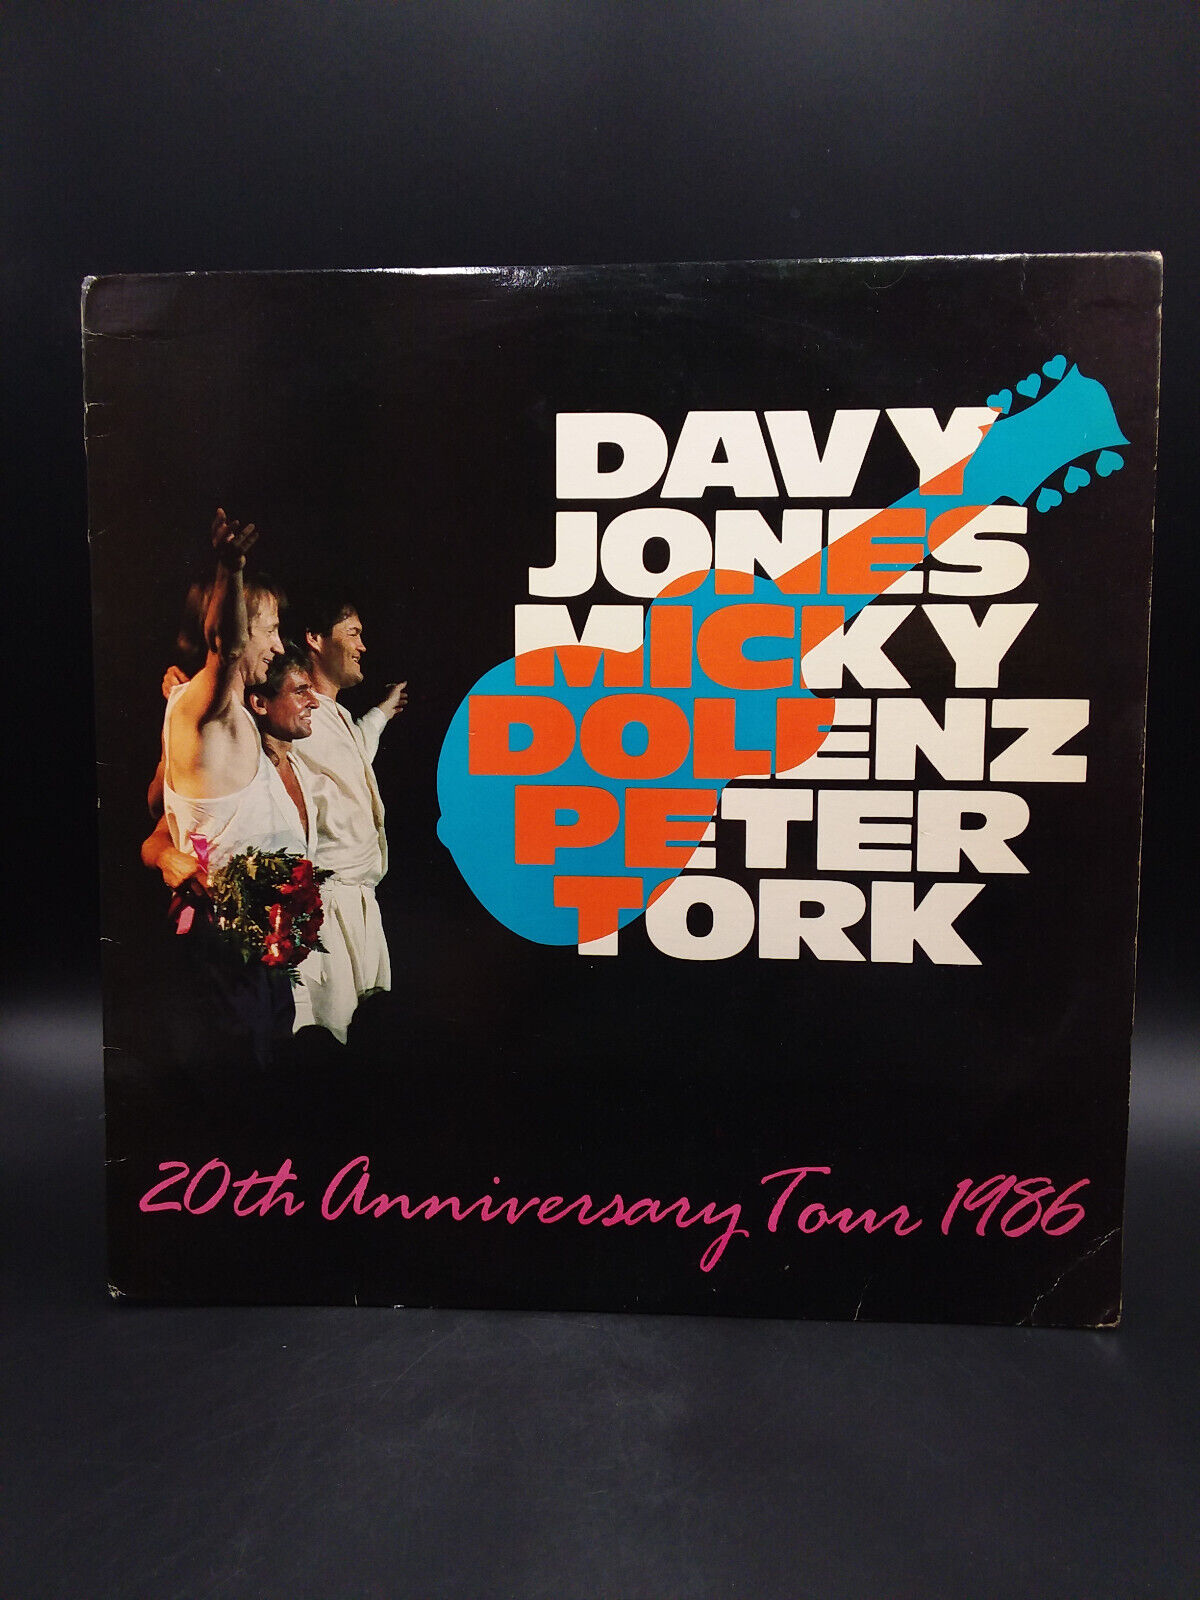 The Monkees, Davy Jones, Micky Dolenz, Peter Tork, 20th Anniversary Tour 1986